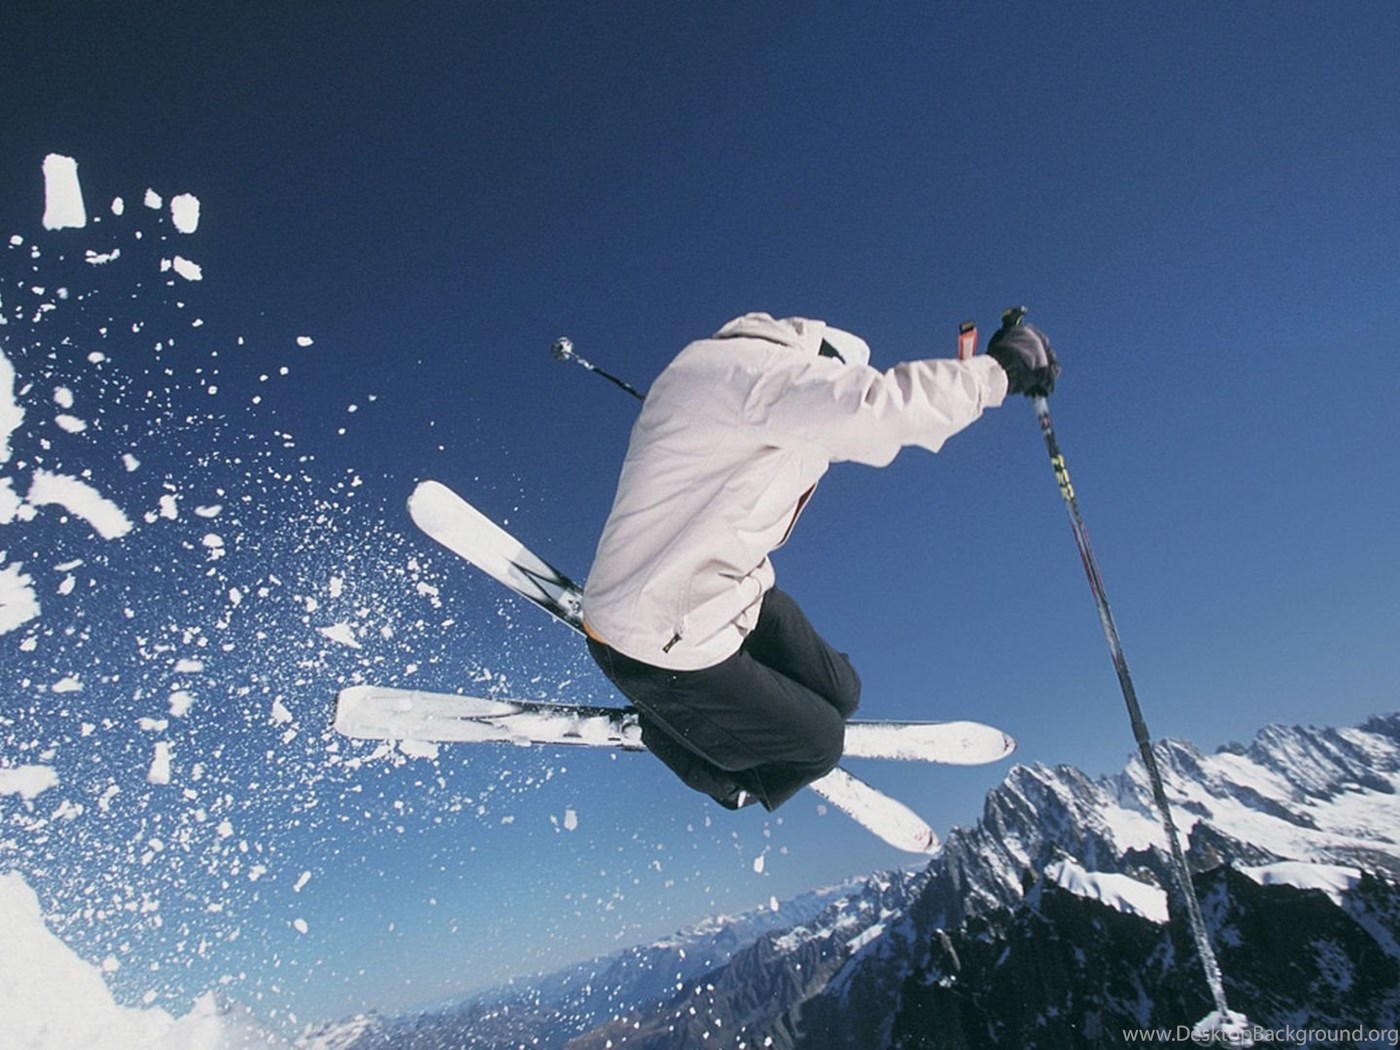 Download Freestyle Skiing Images Fullscreen Standart 4:3 1400x1050 Desktop Background...